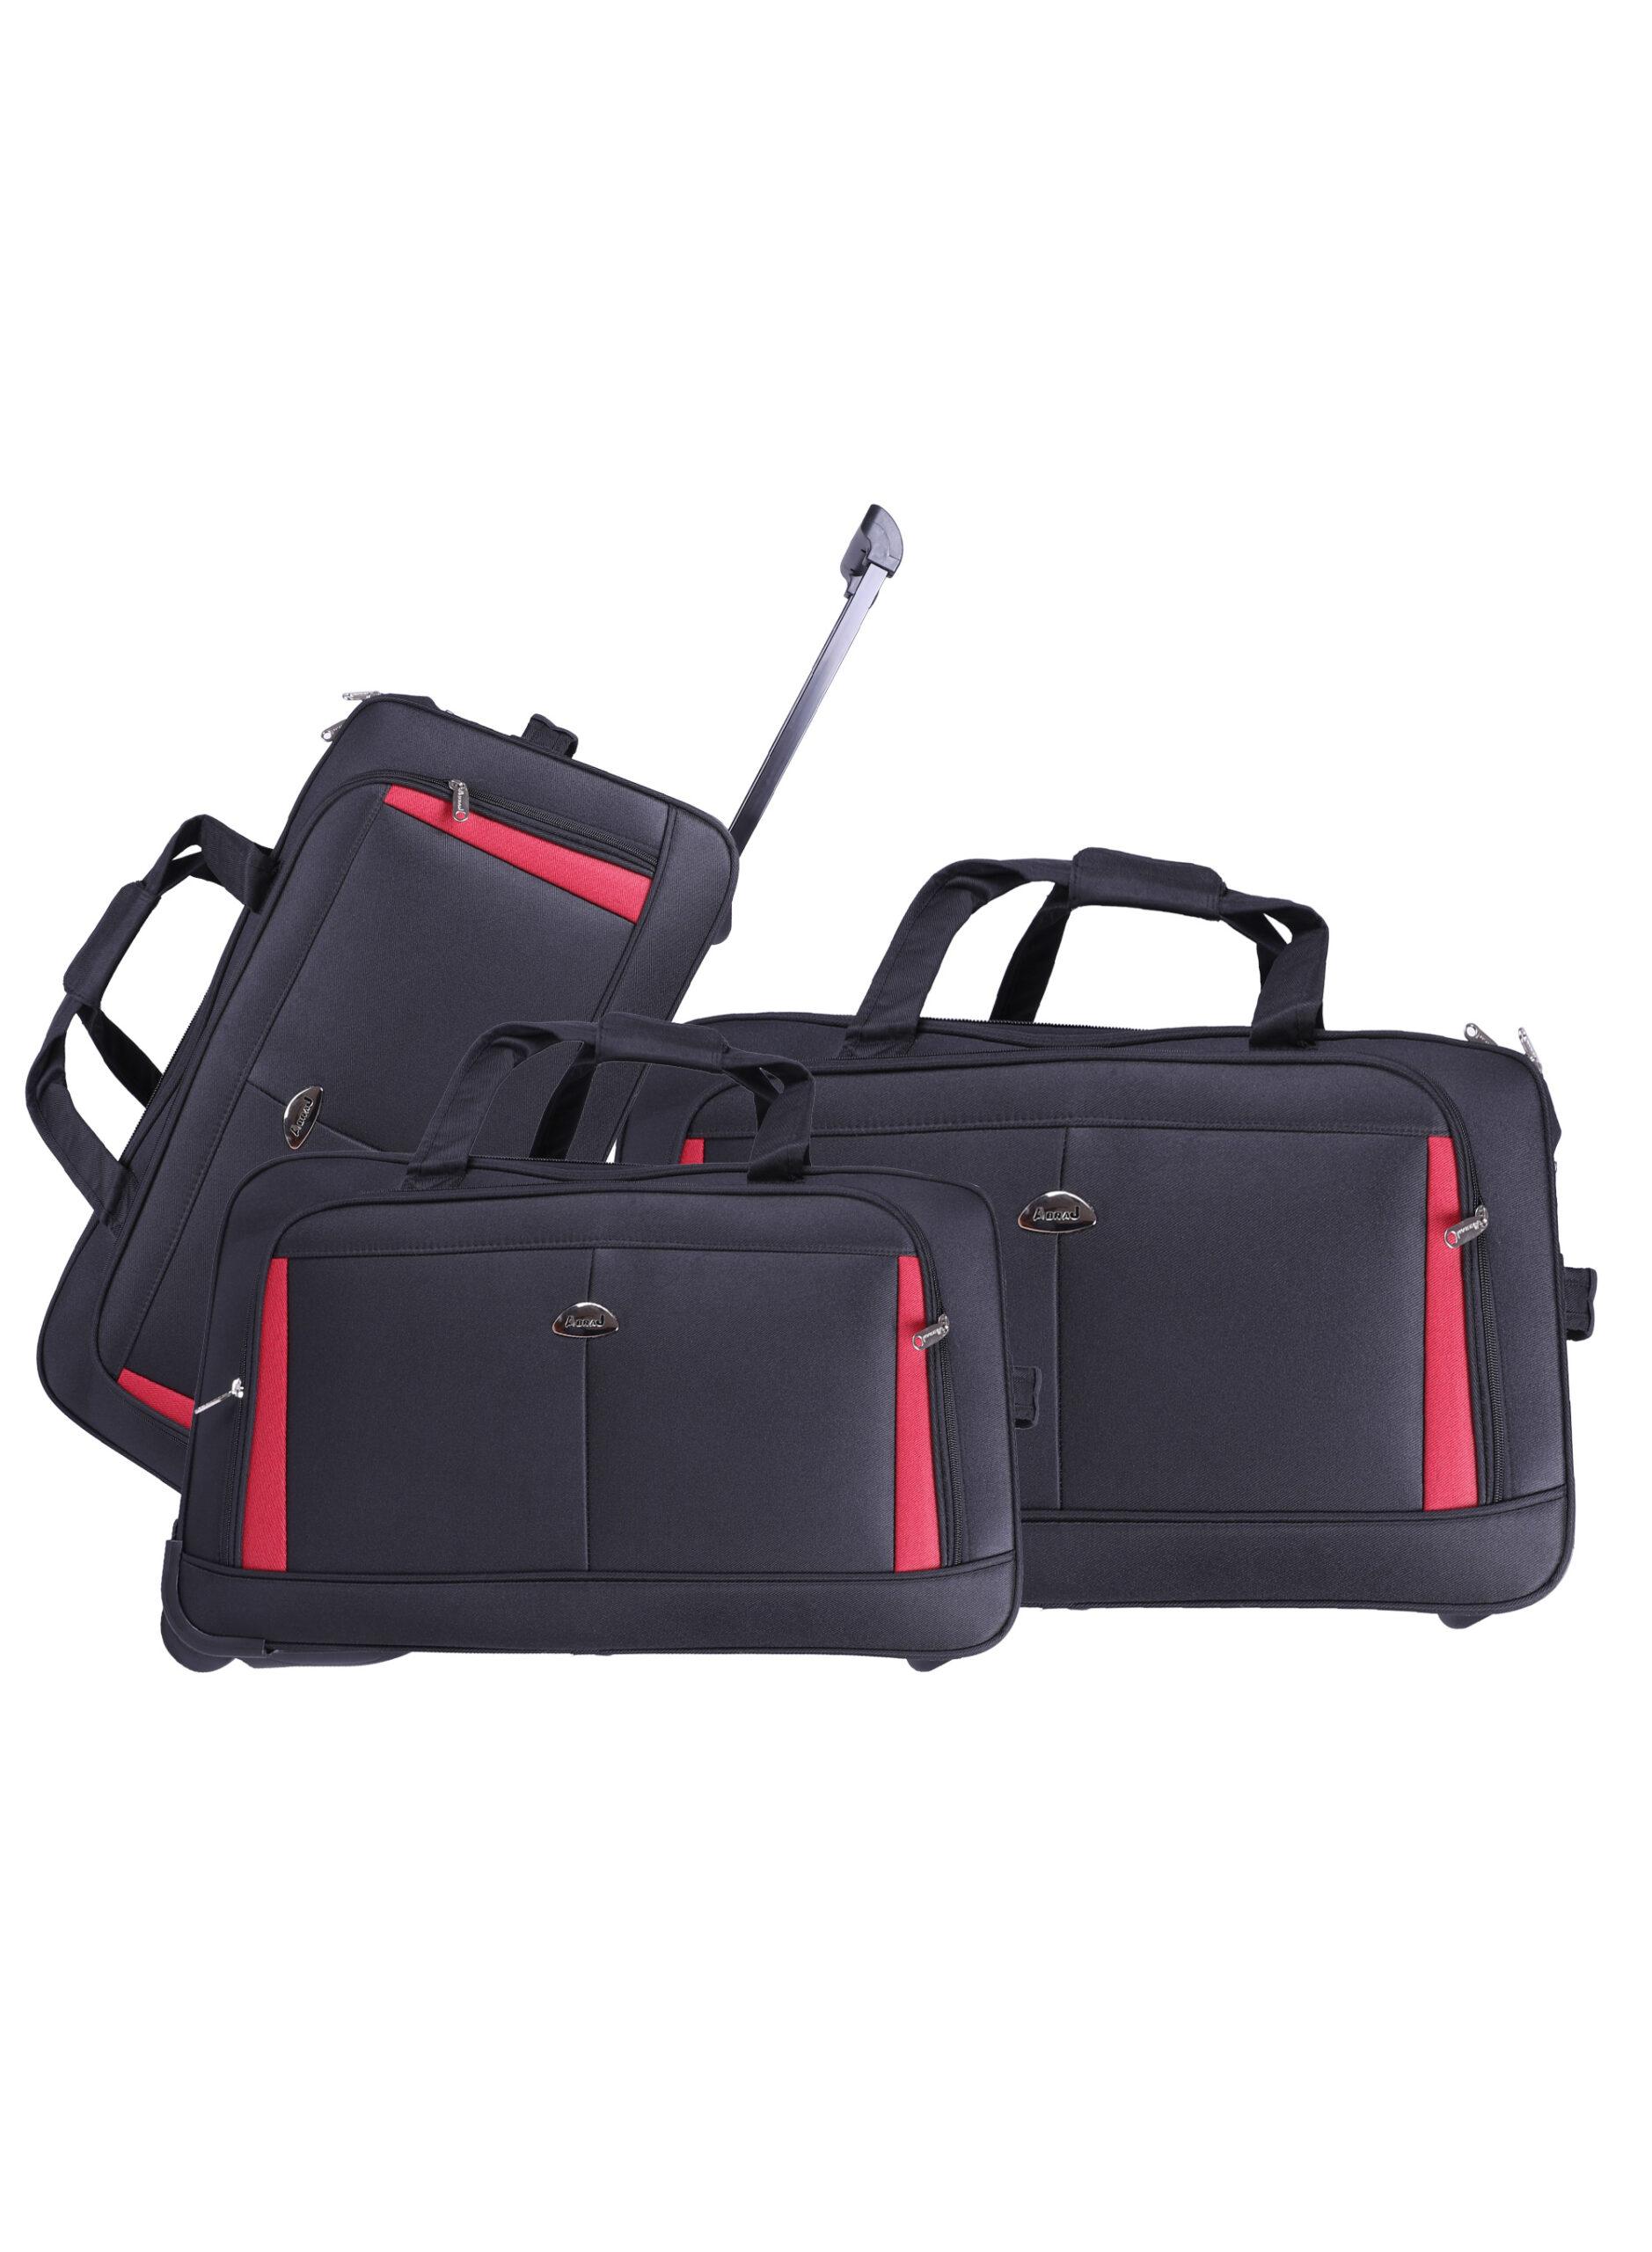 شنطة سفر (حقيبة سفر) عدد 3 – أسود  ABRAJ 2 Wheel Duffle Bag